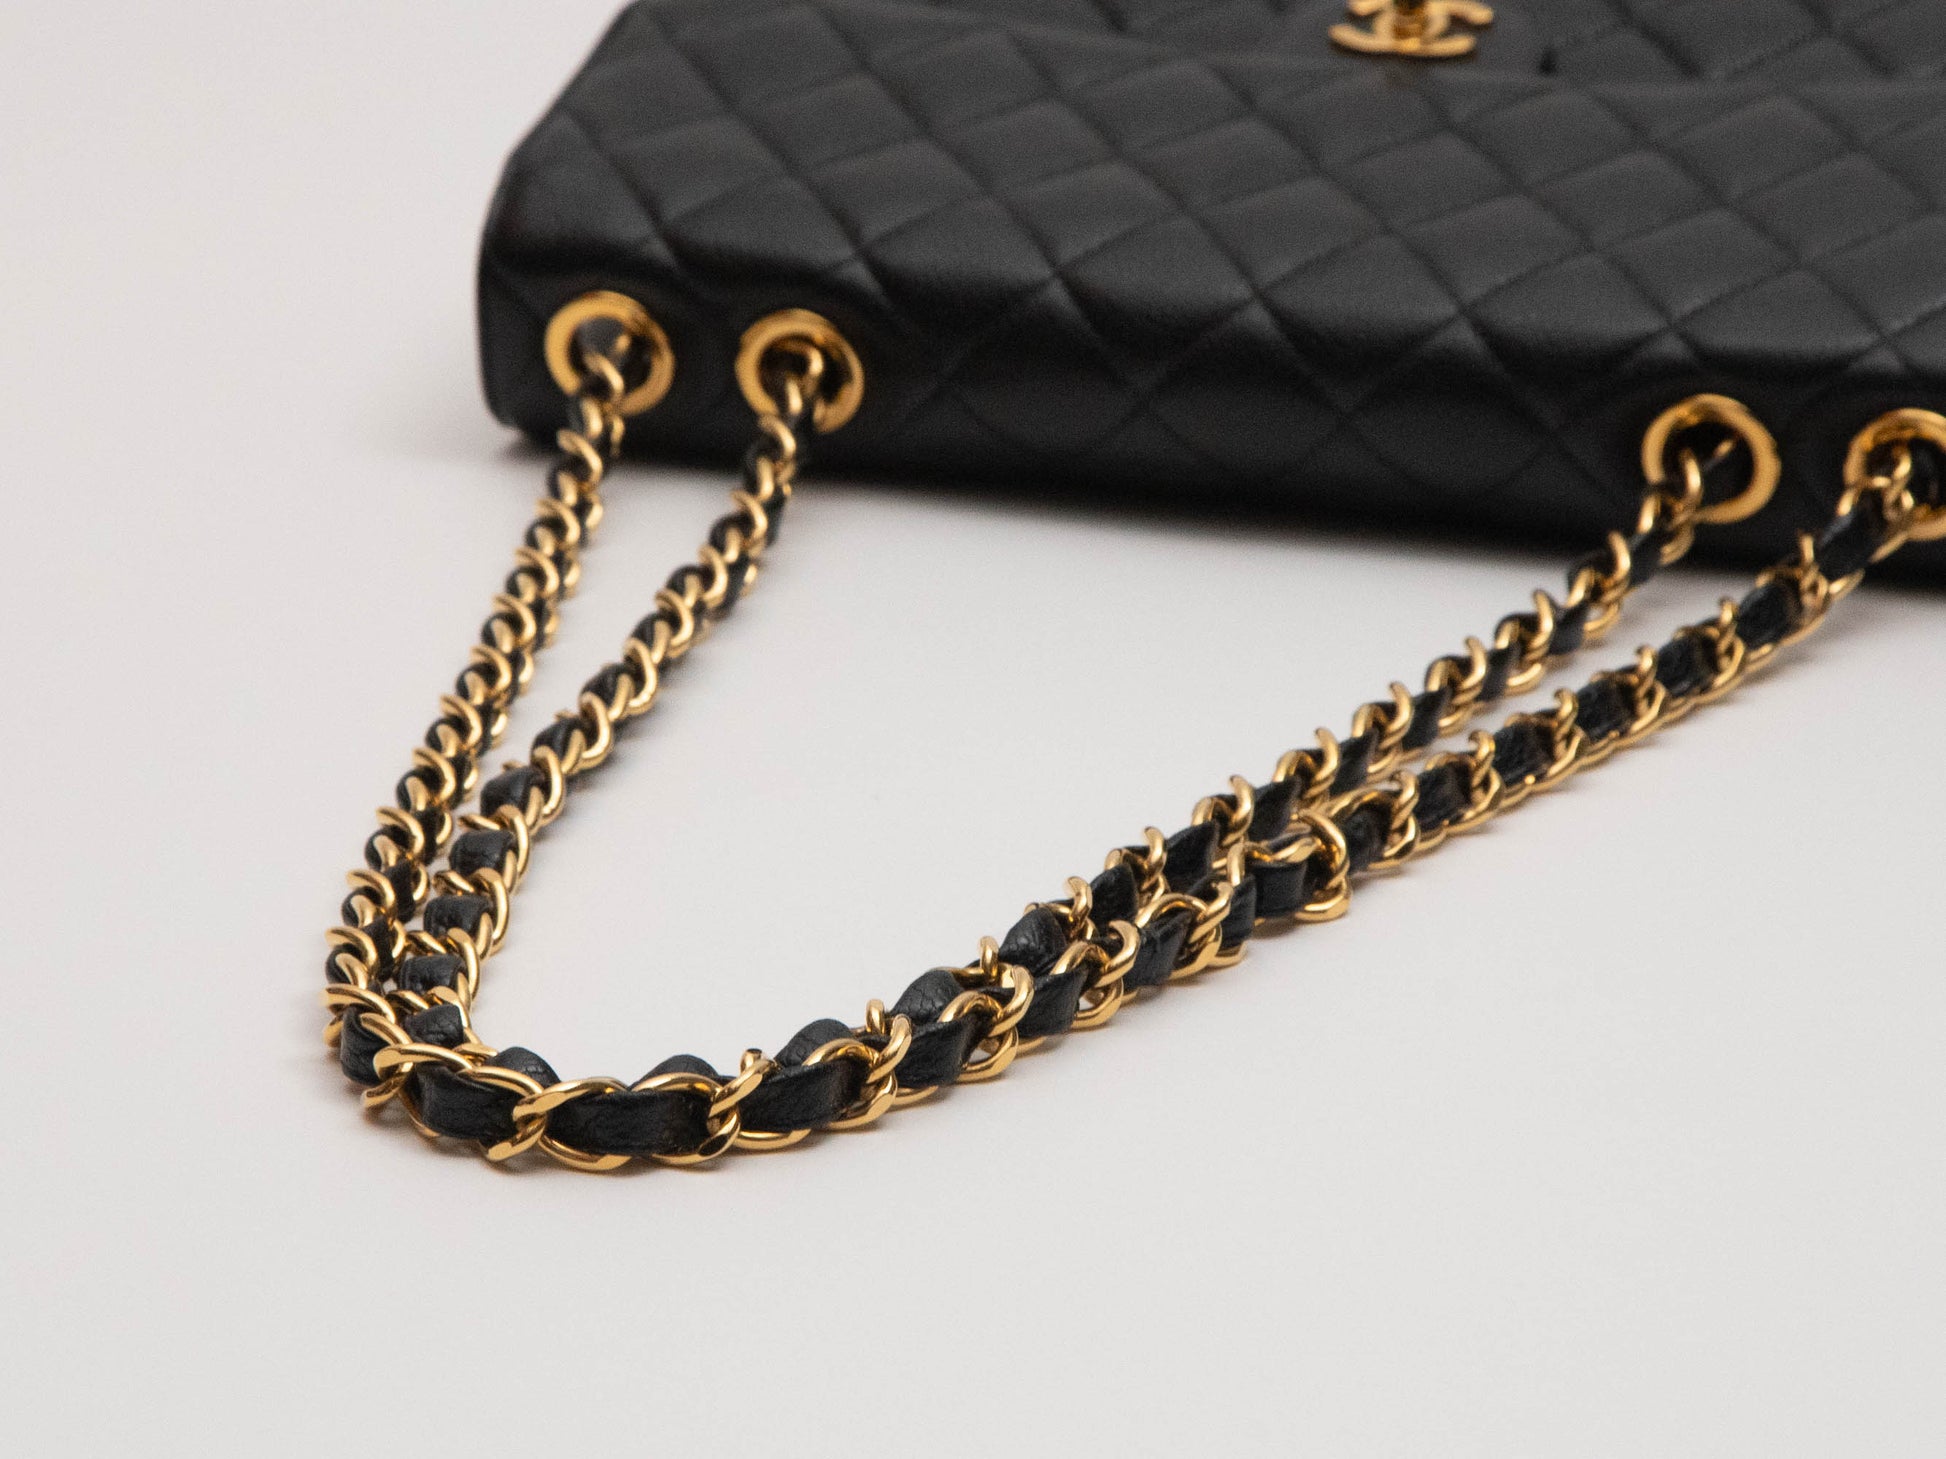 Vintage Chanel XXL Jumbo Double Chain Matelasse Shoulder Bag